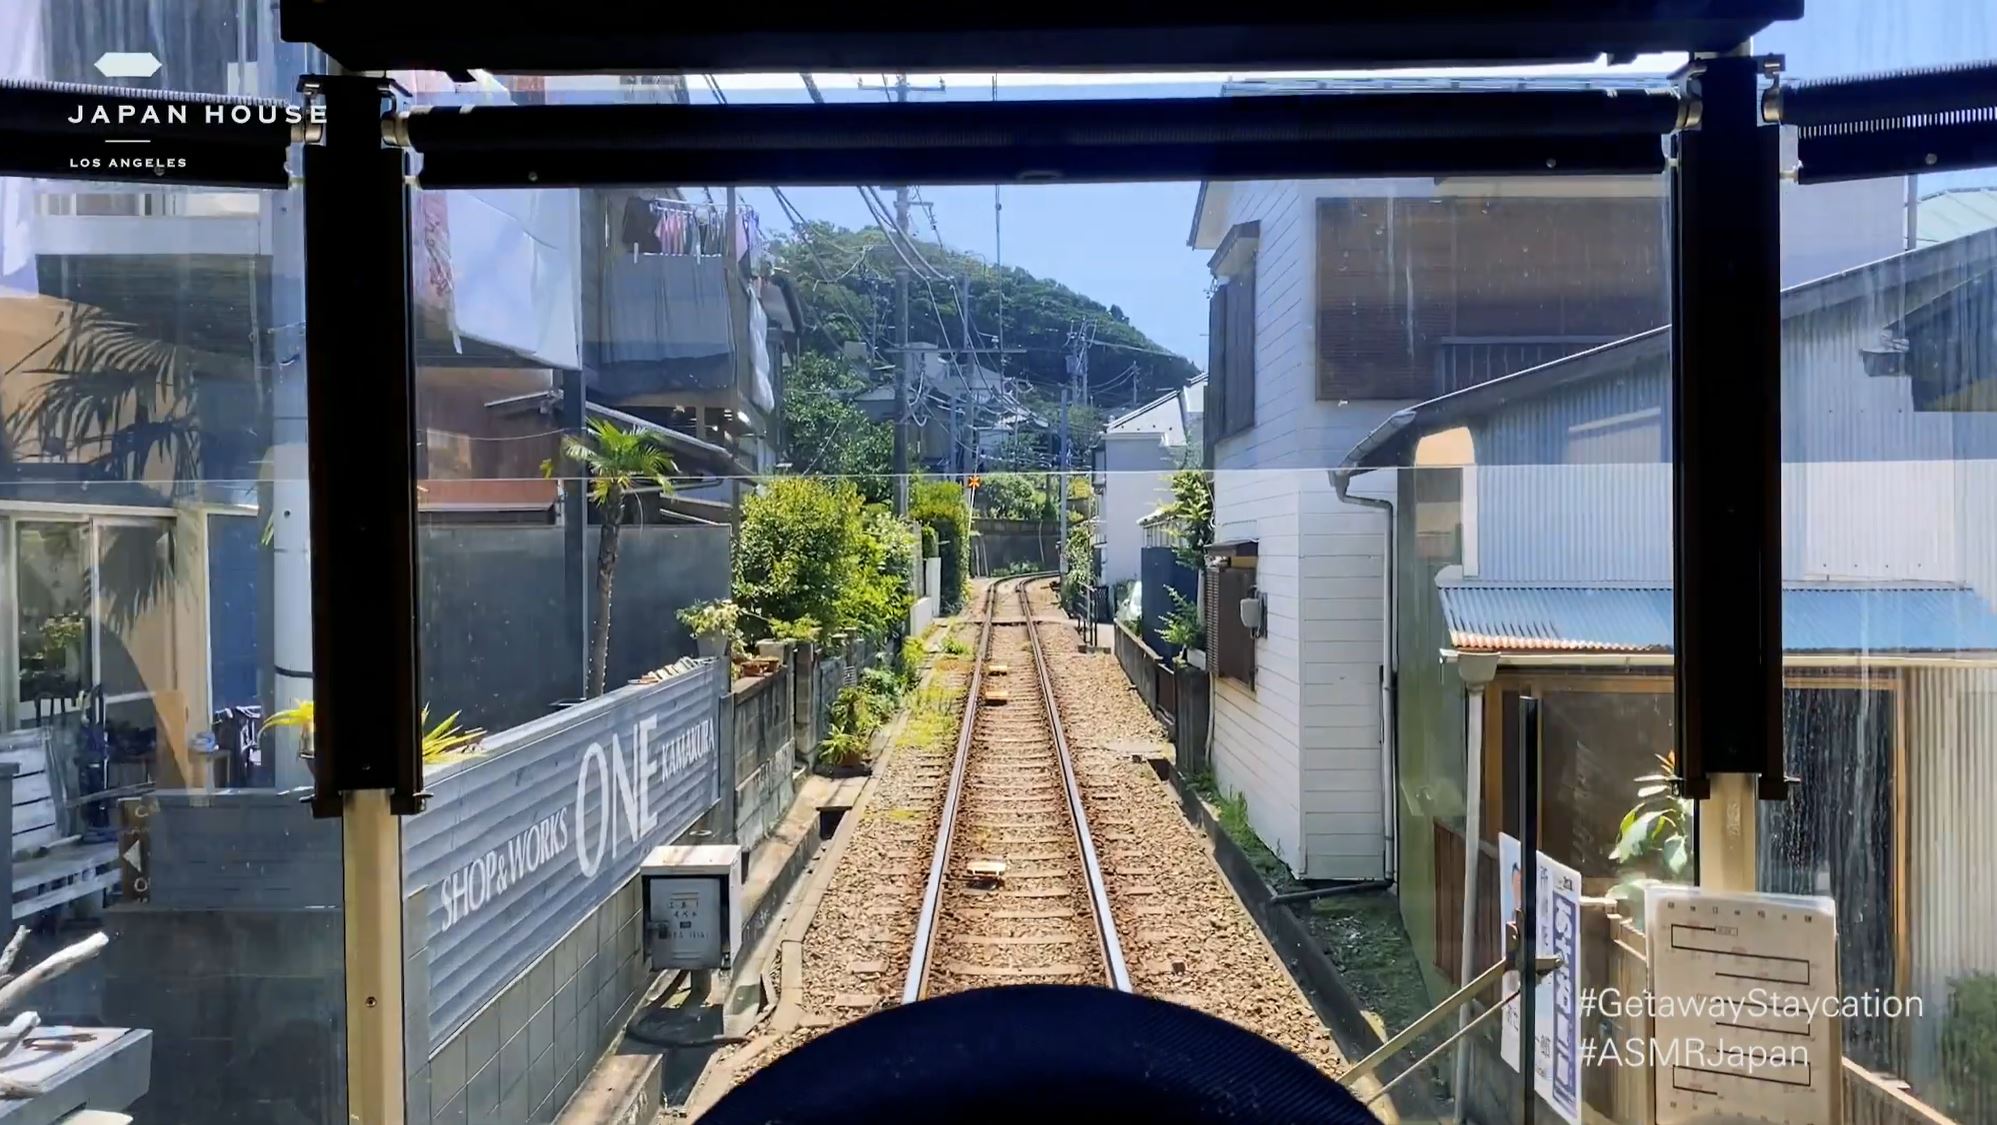 riding a train